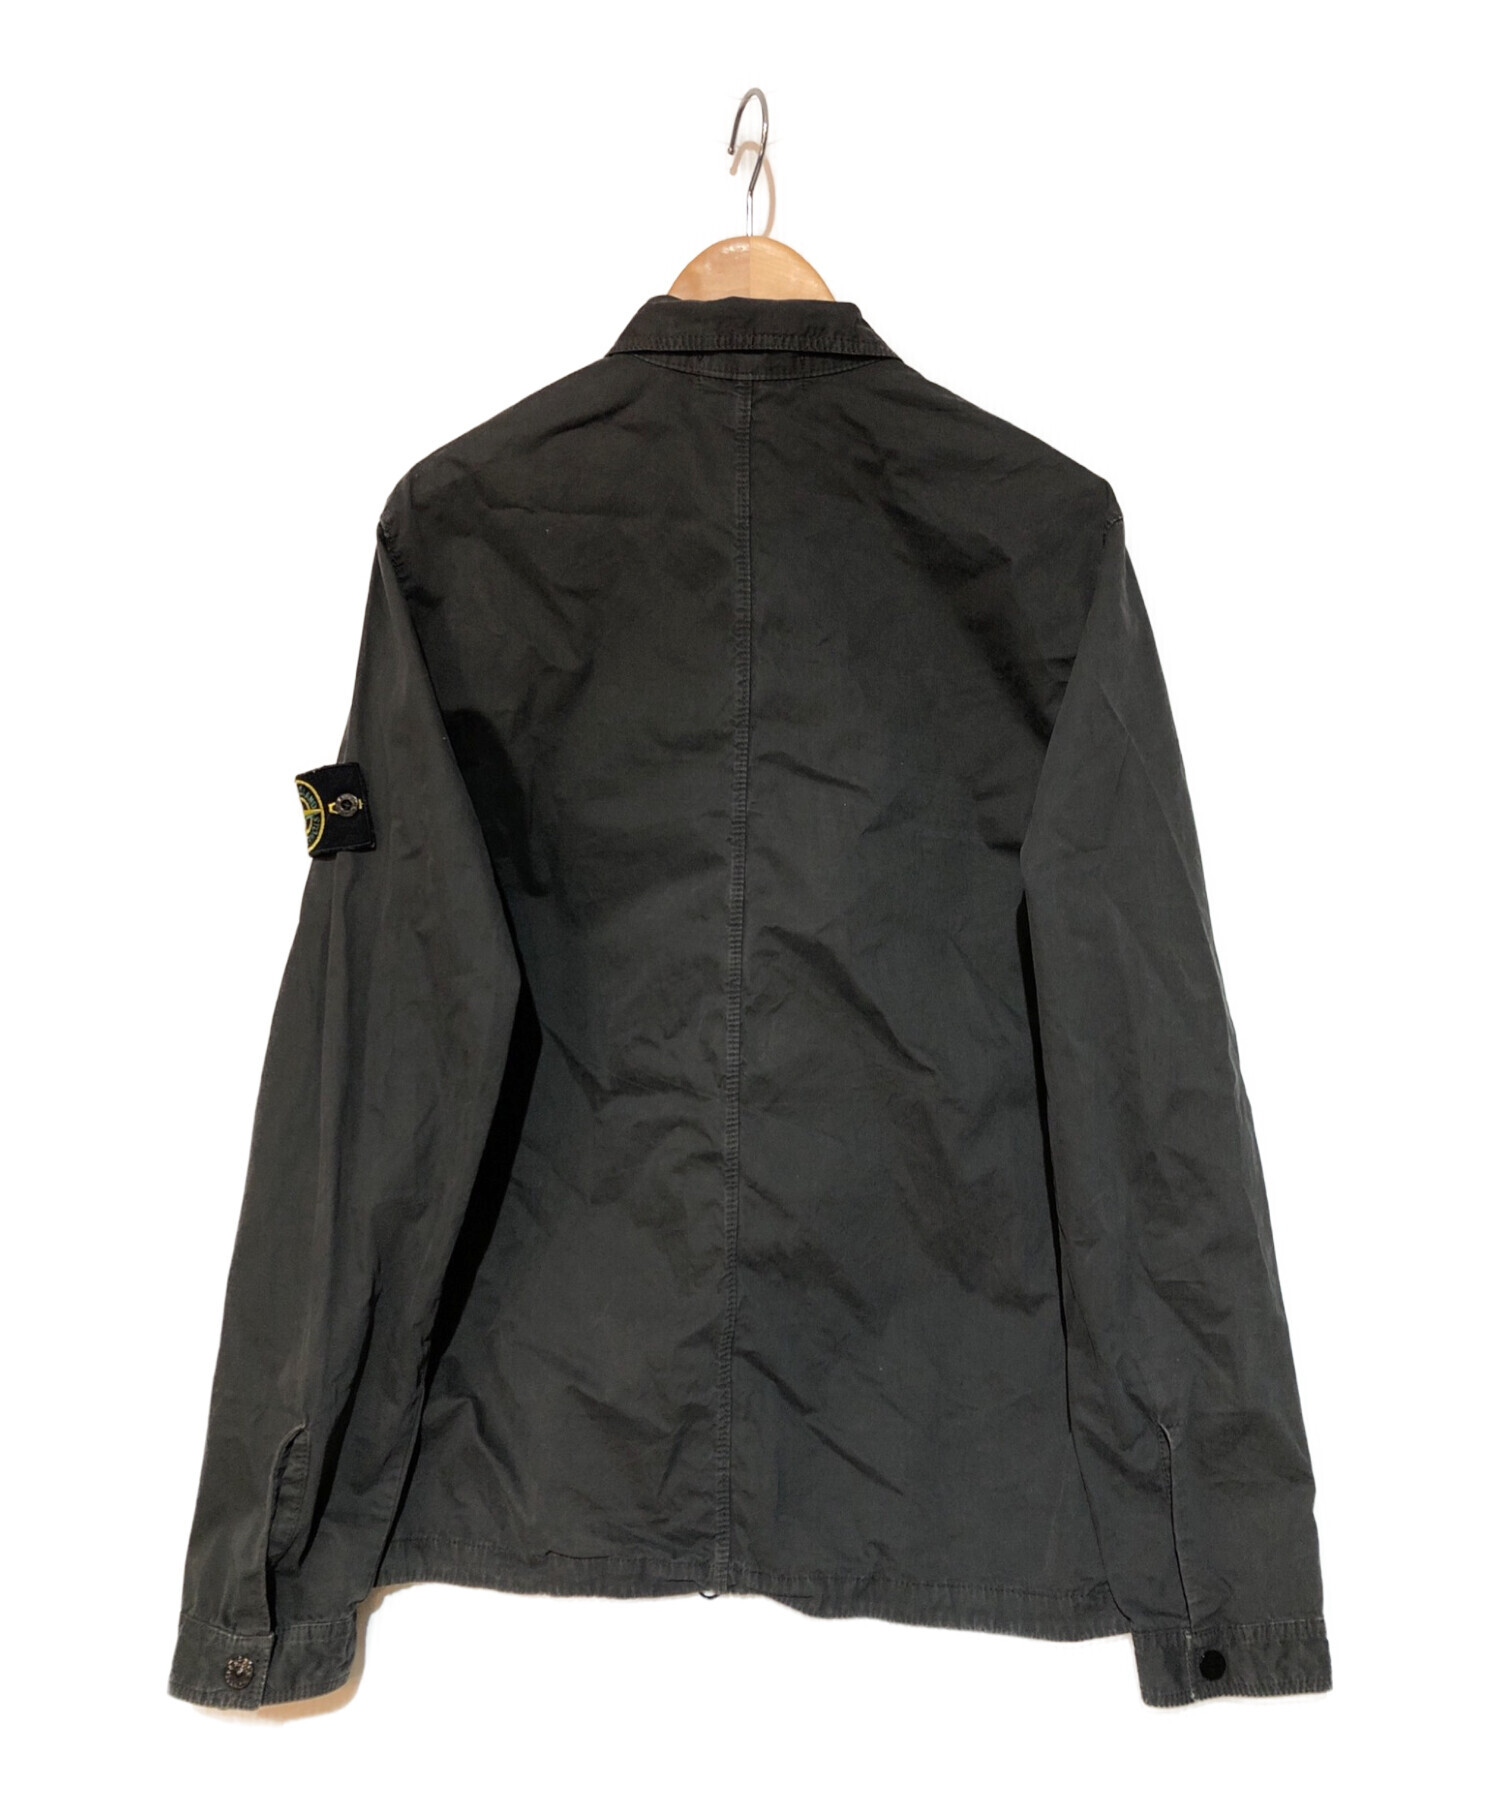 STONE ISLAND (ストーンアイランド) ガーメントダイコットンワークシャツ シャツジャケット ブラック サイズ:M